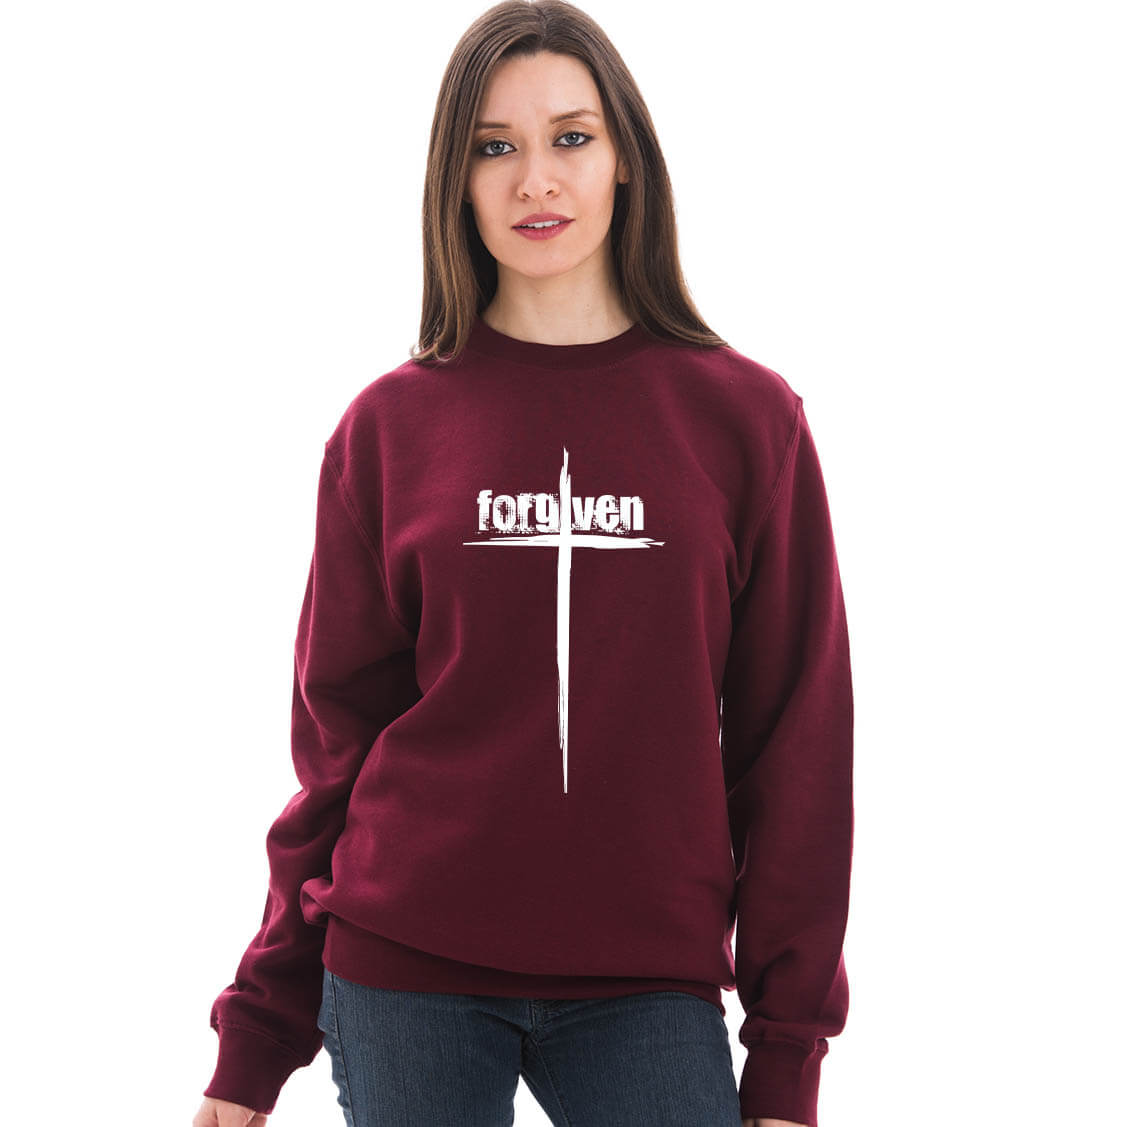 Forgiven Cross Crewneck Sweatshirt